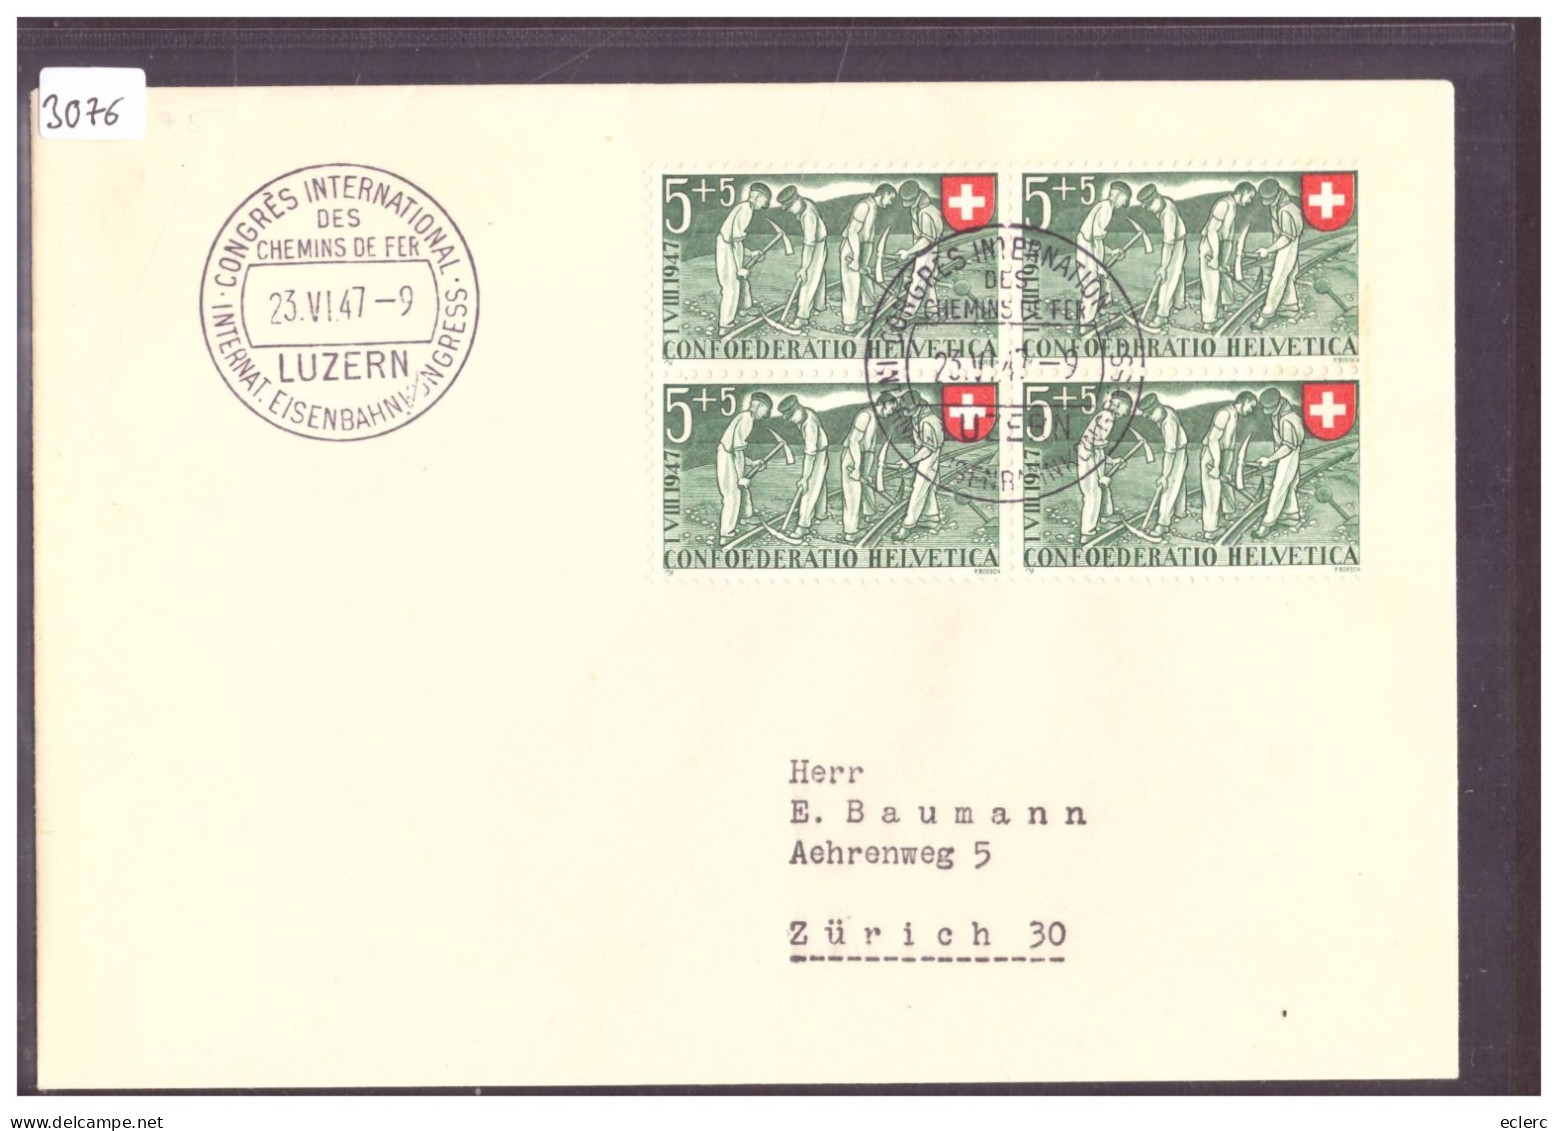 LUZERN - CONGRES INTERNATIONAL DES CHEMINS DE FER 1947 - Postmark Collection